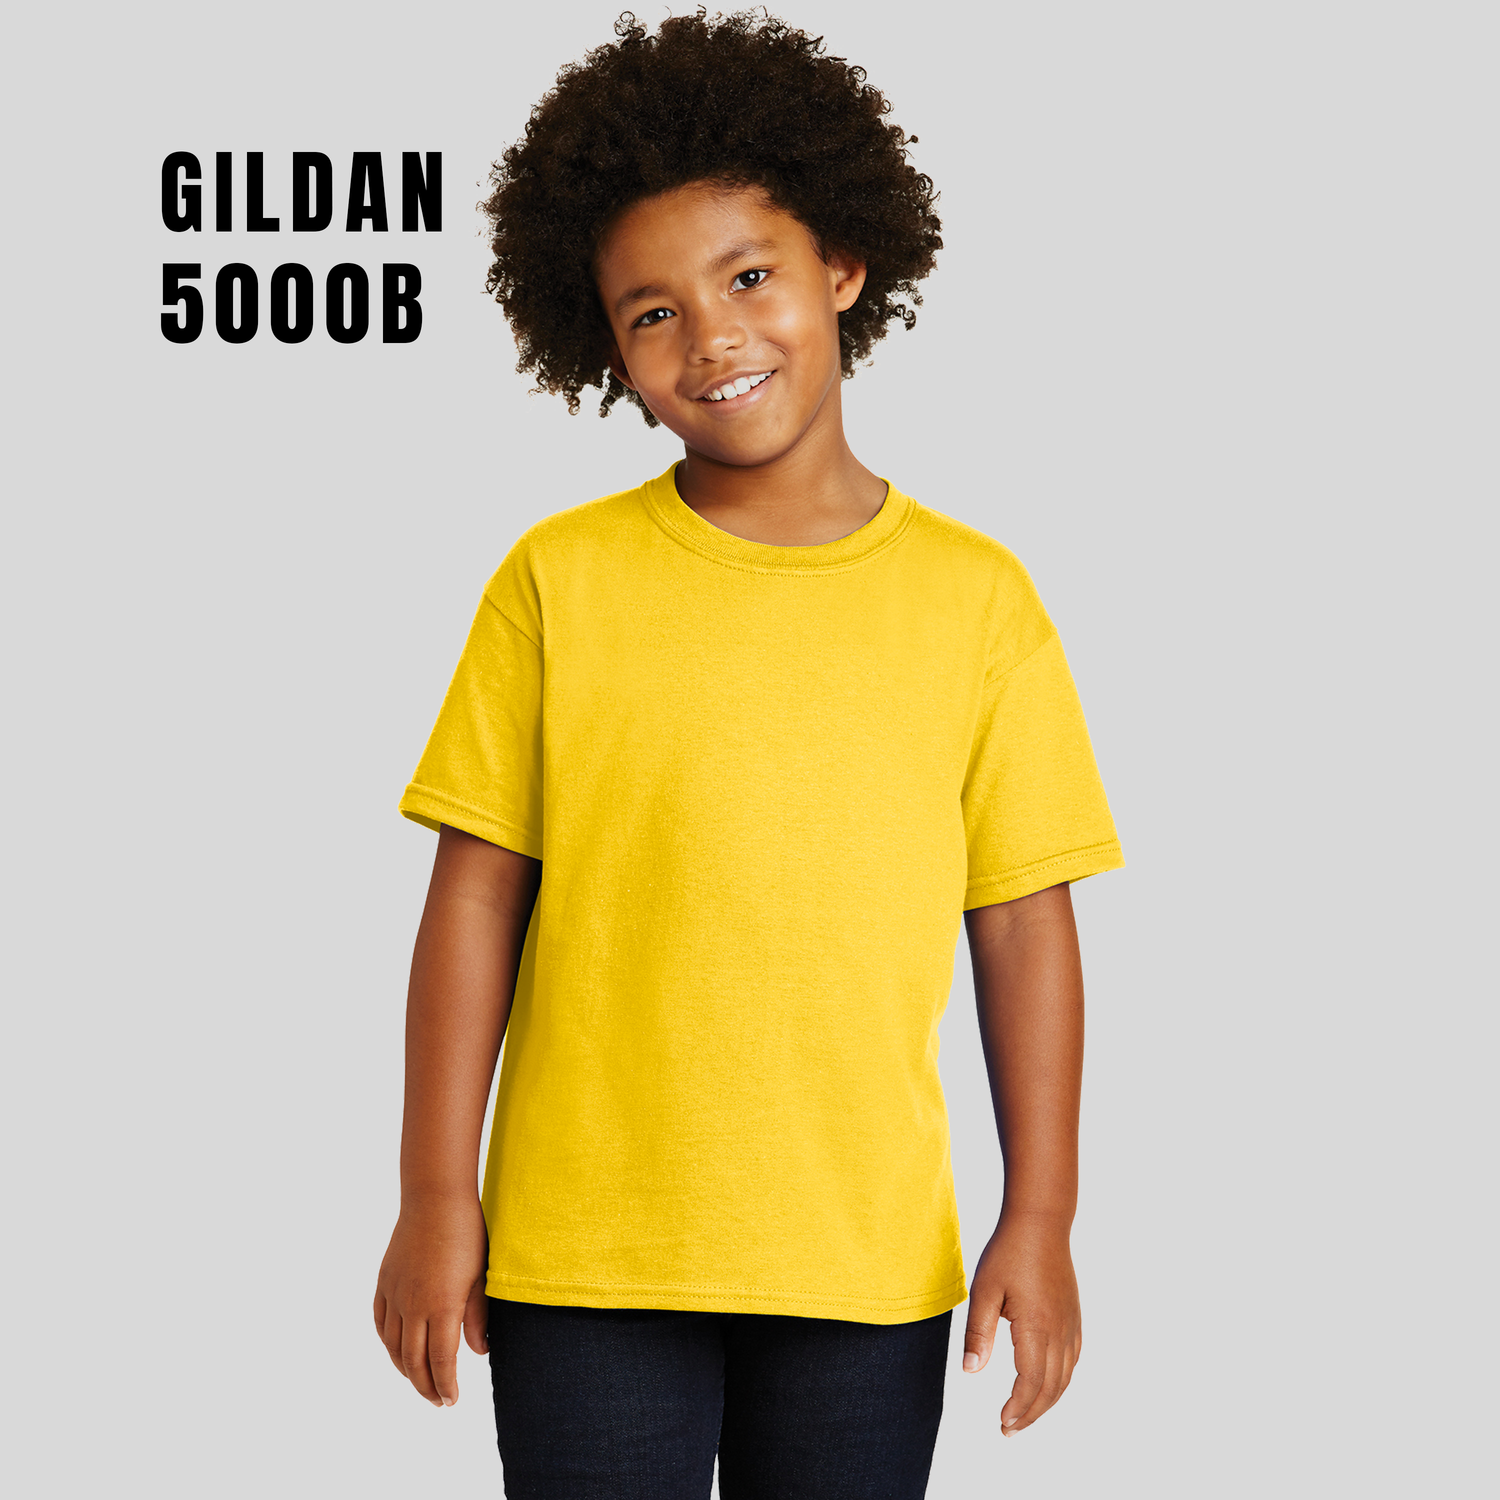 Gildan 5000B Sample